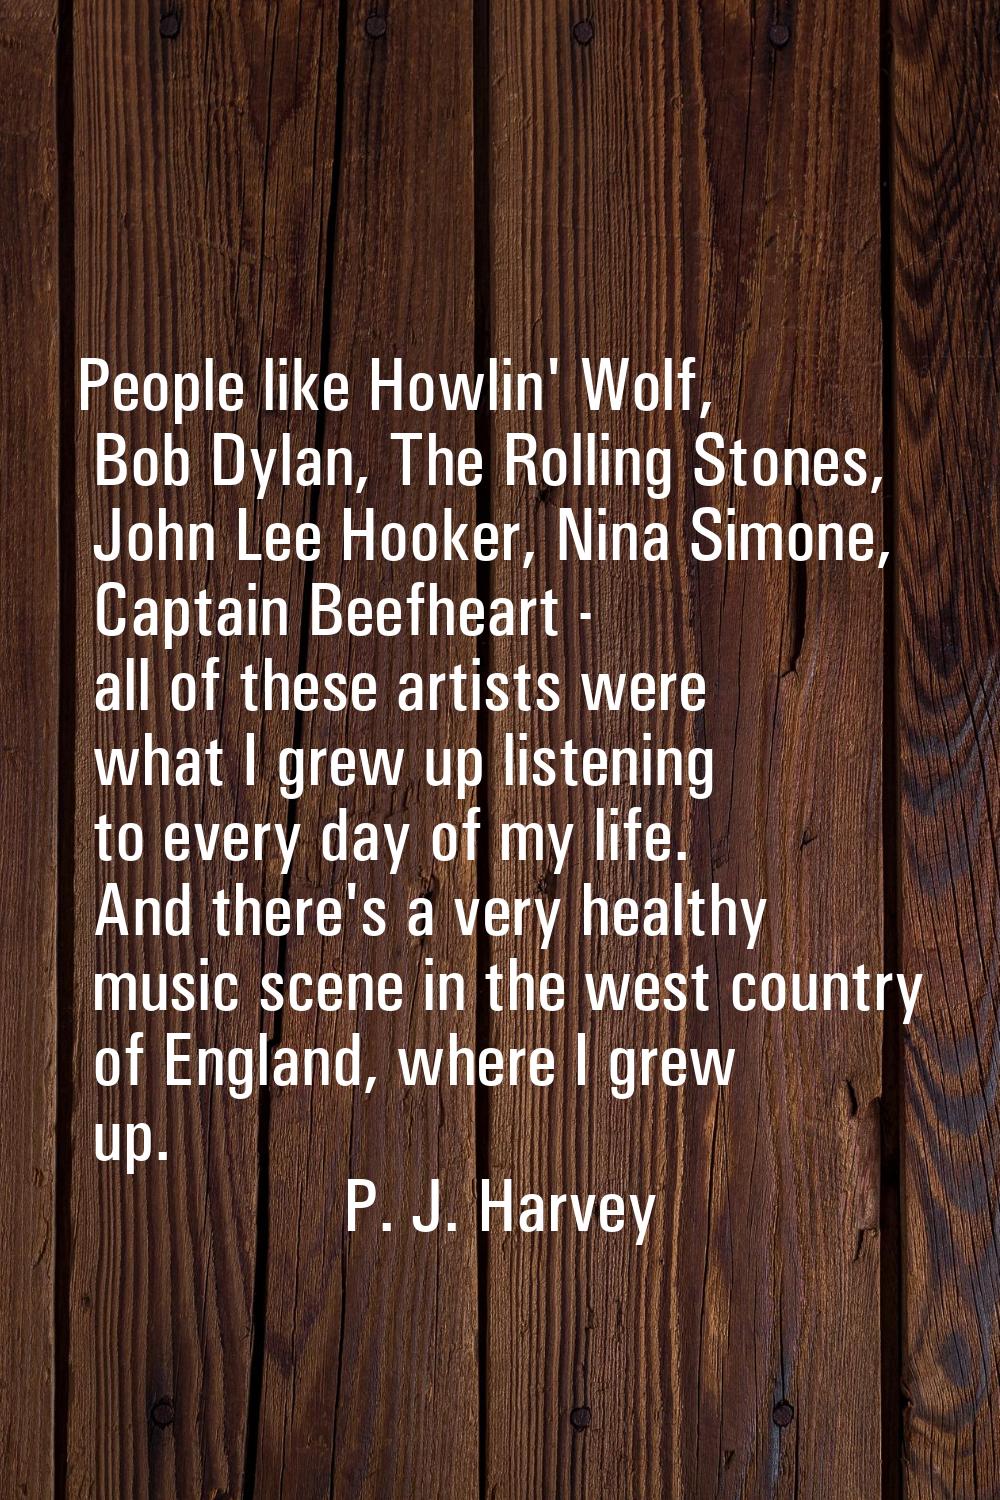 People like Howlin' Wolf, Bob Dylan, The Rolling Stones, John Lee Hooker, Nina Simone, Captain Beef